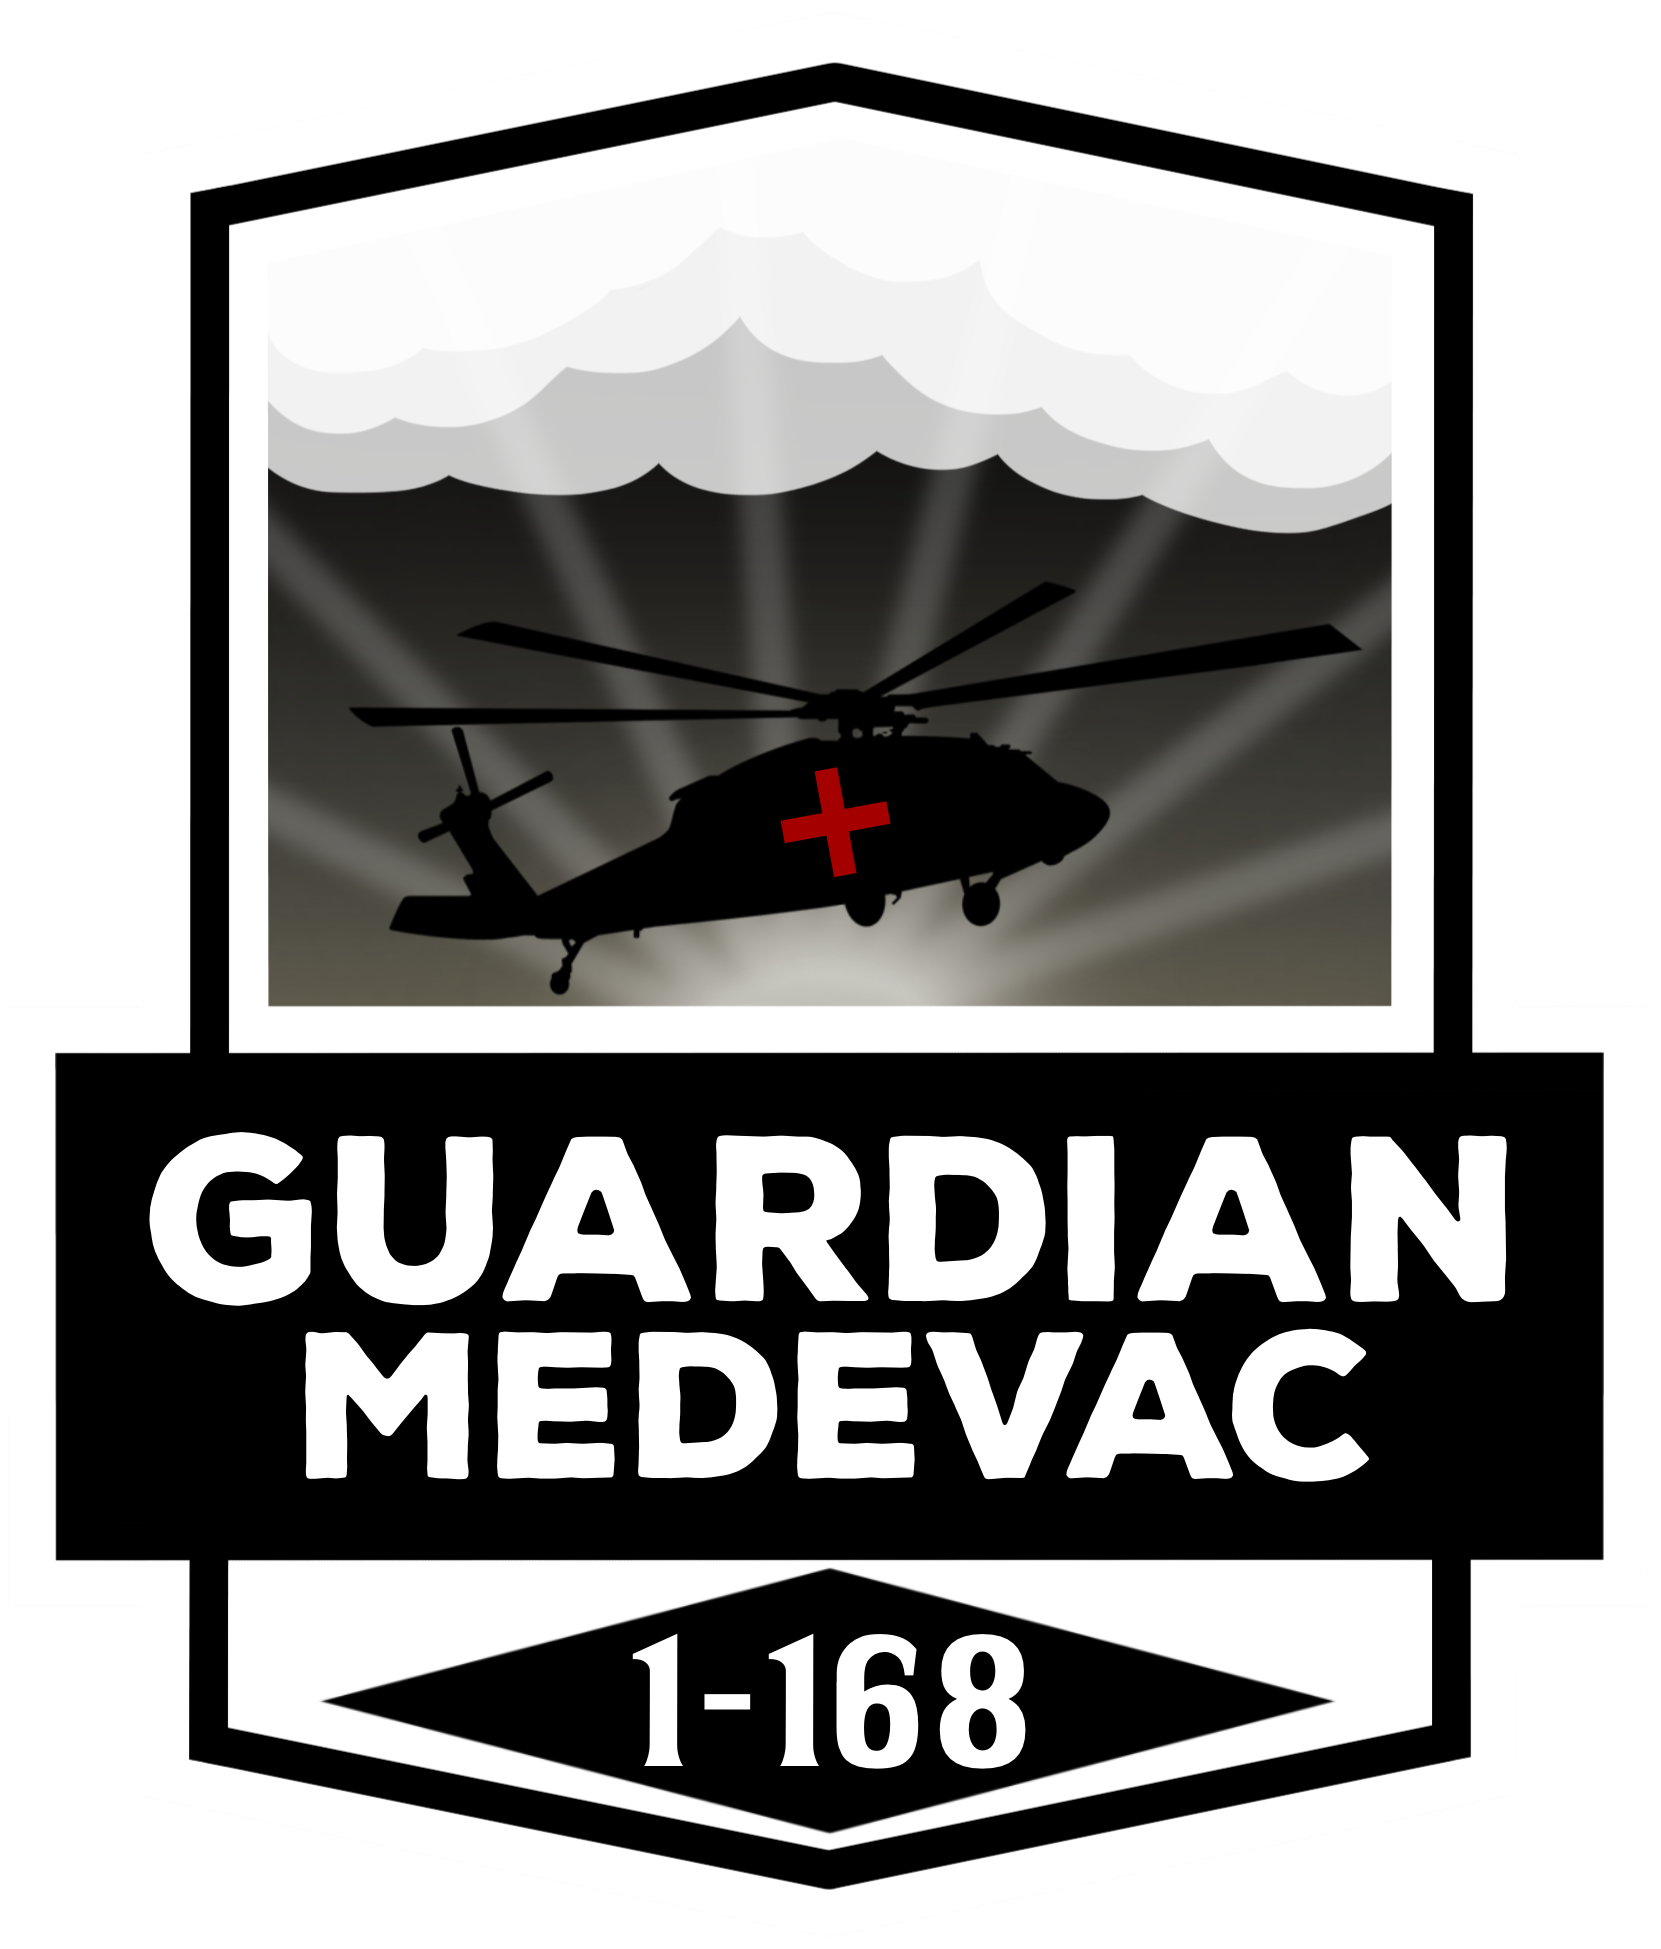 Guardian MEDEVAC - 2 Feb 2021